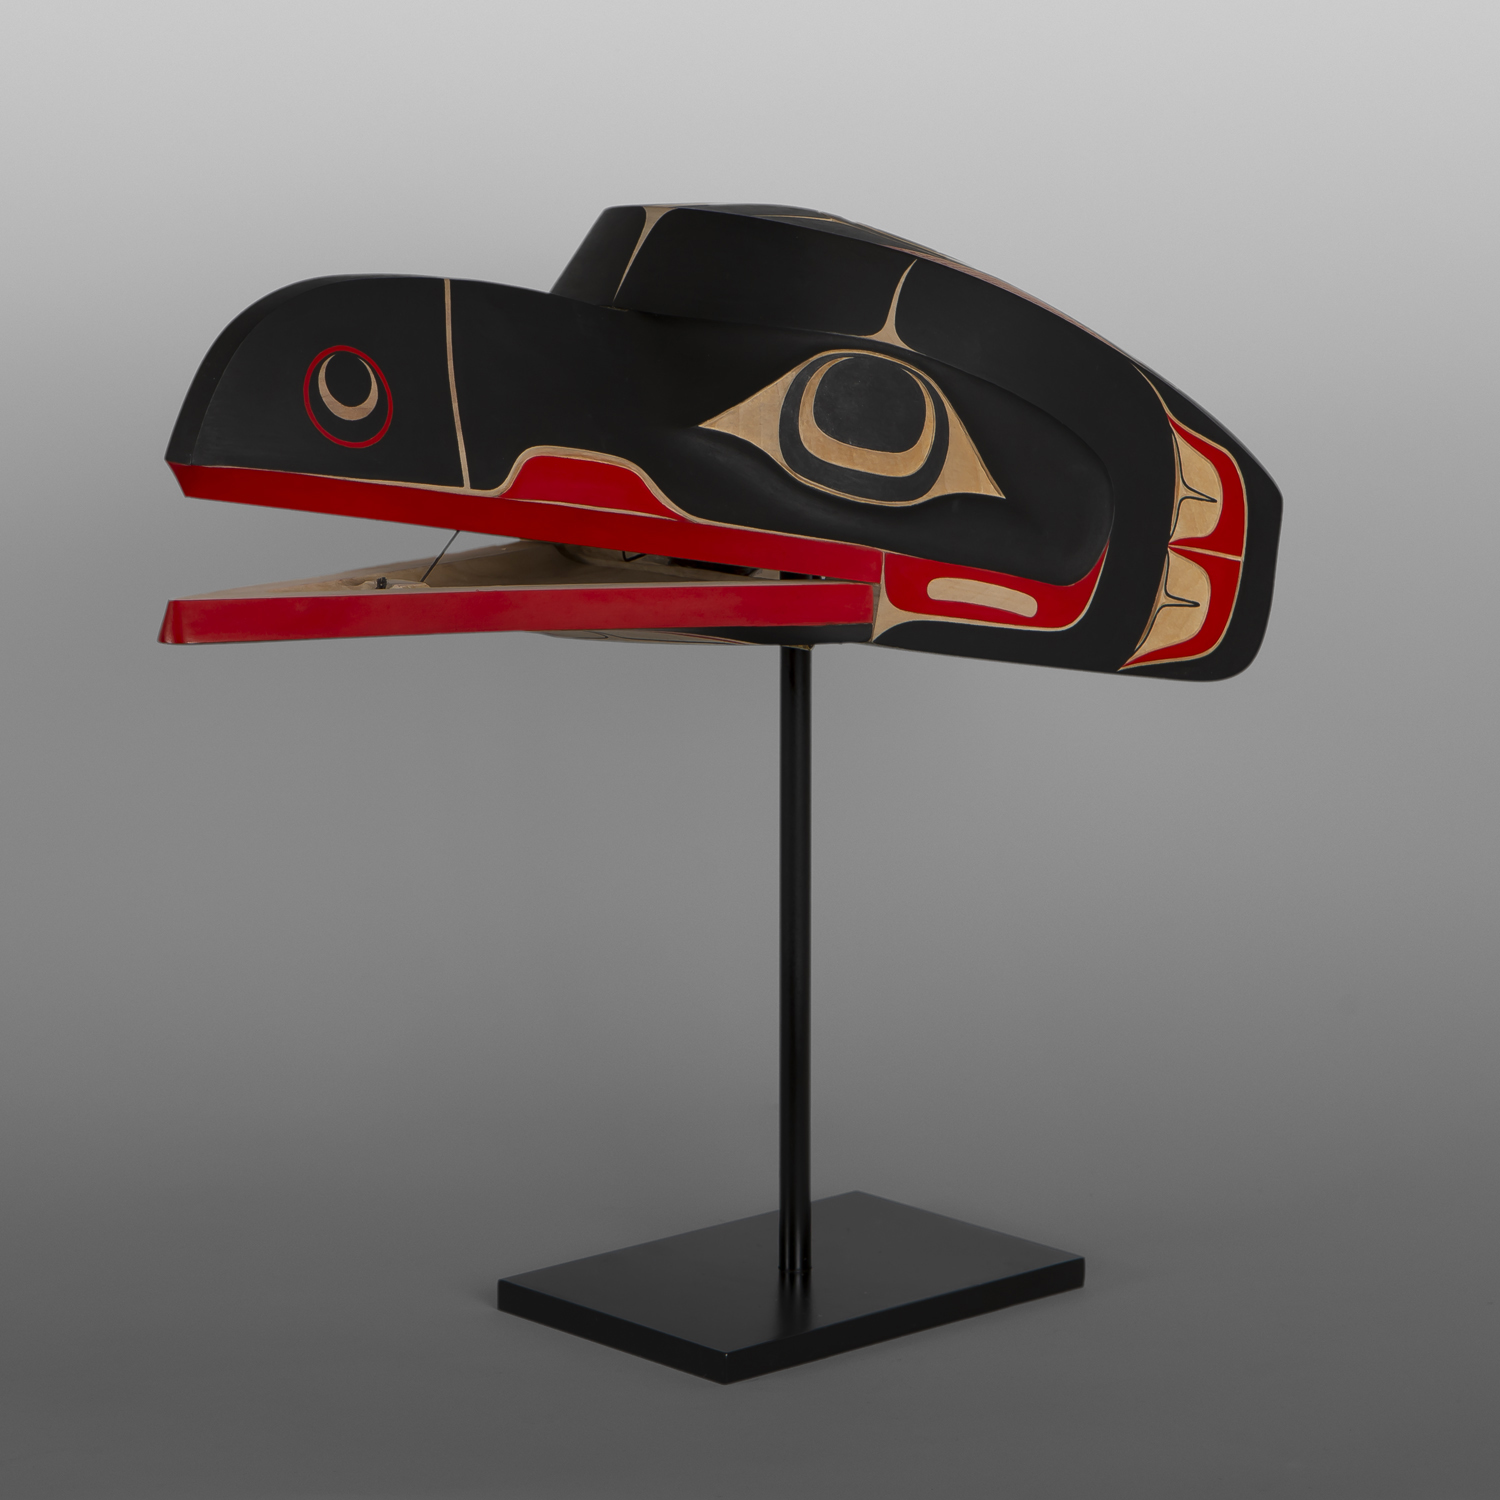 Txaamsm Raven Headdress
Shawn Aster
Tsimshian
Alder, paint, custom stand
14" x 8½” x 5”
$5800
Mask Show 2024